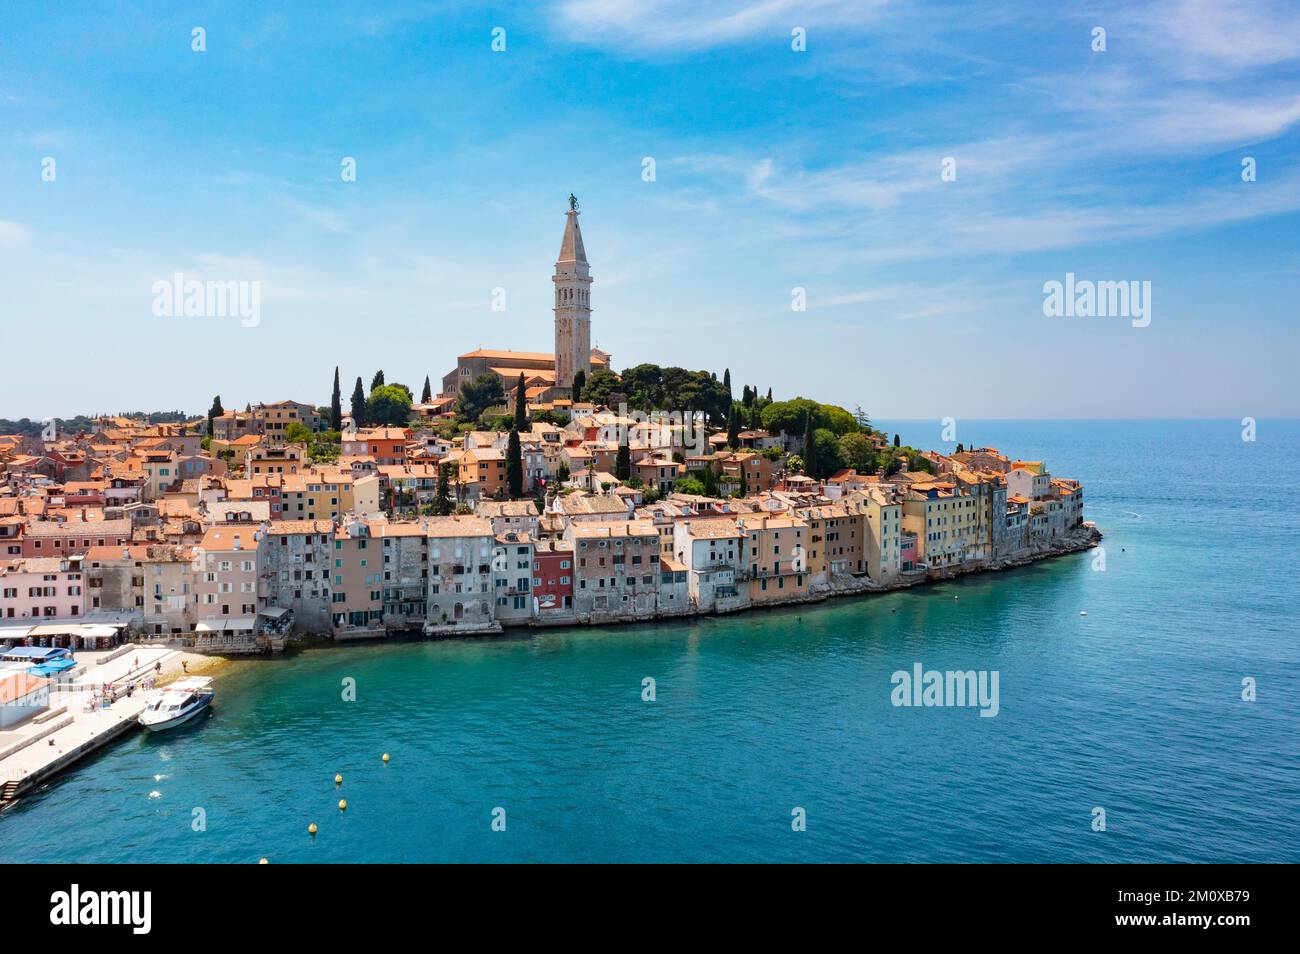 Adriatic Sea, Old Town with Church of St. Euphemia, Rovinj, Istria, Croatia, Europe Stock Photo